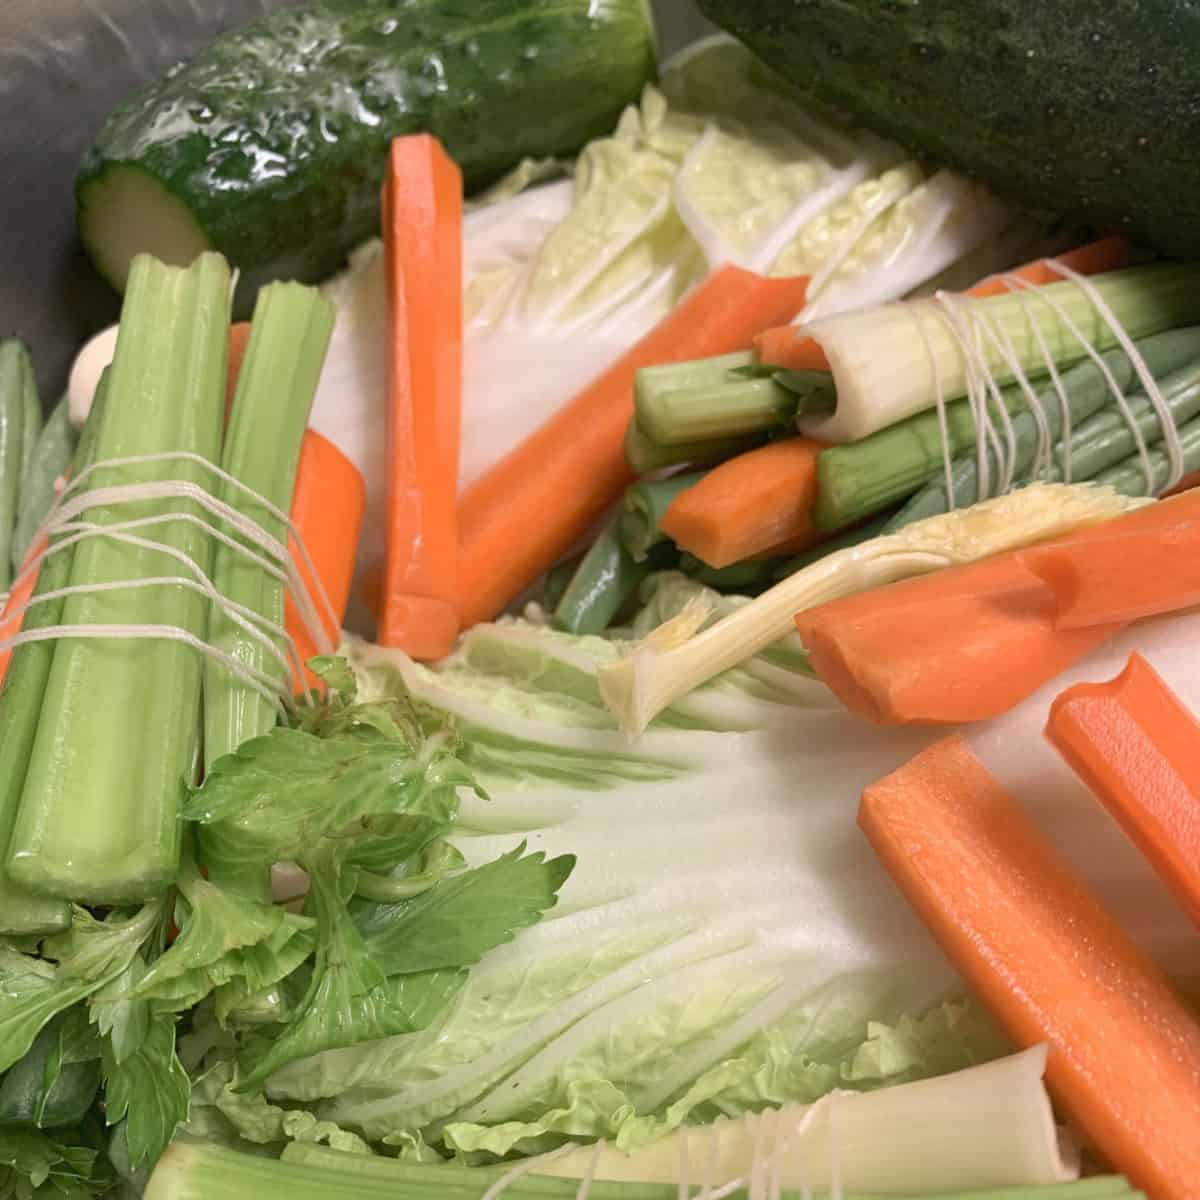 T’too – Armenian Pickled Vegetables